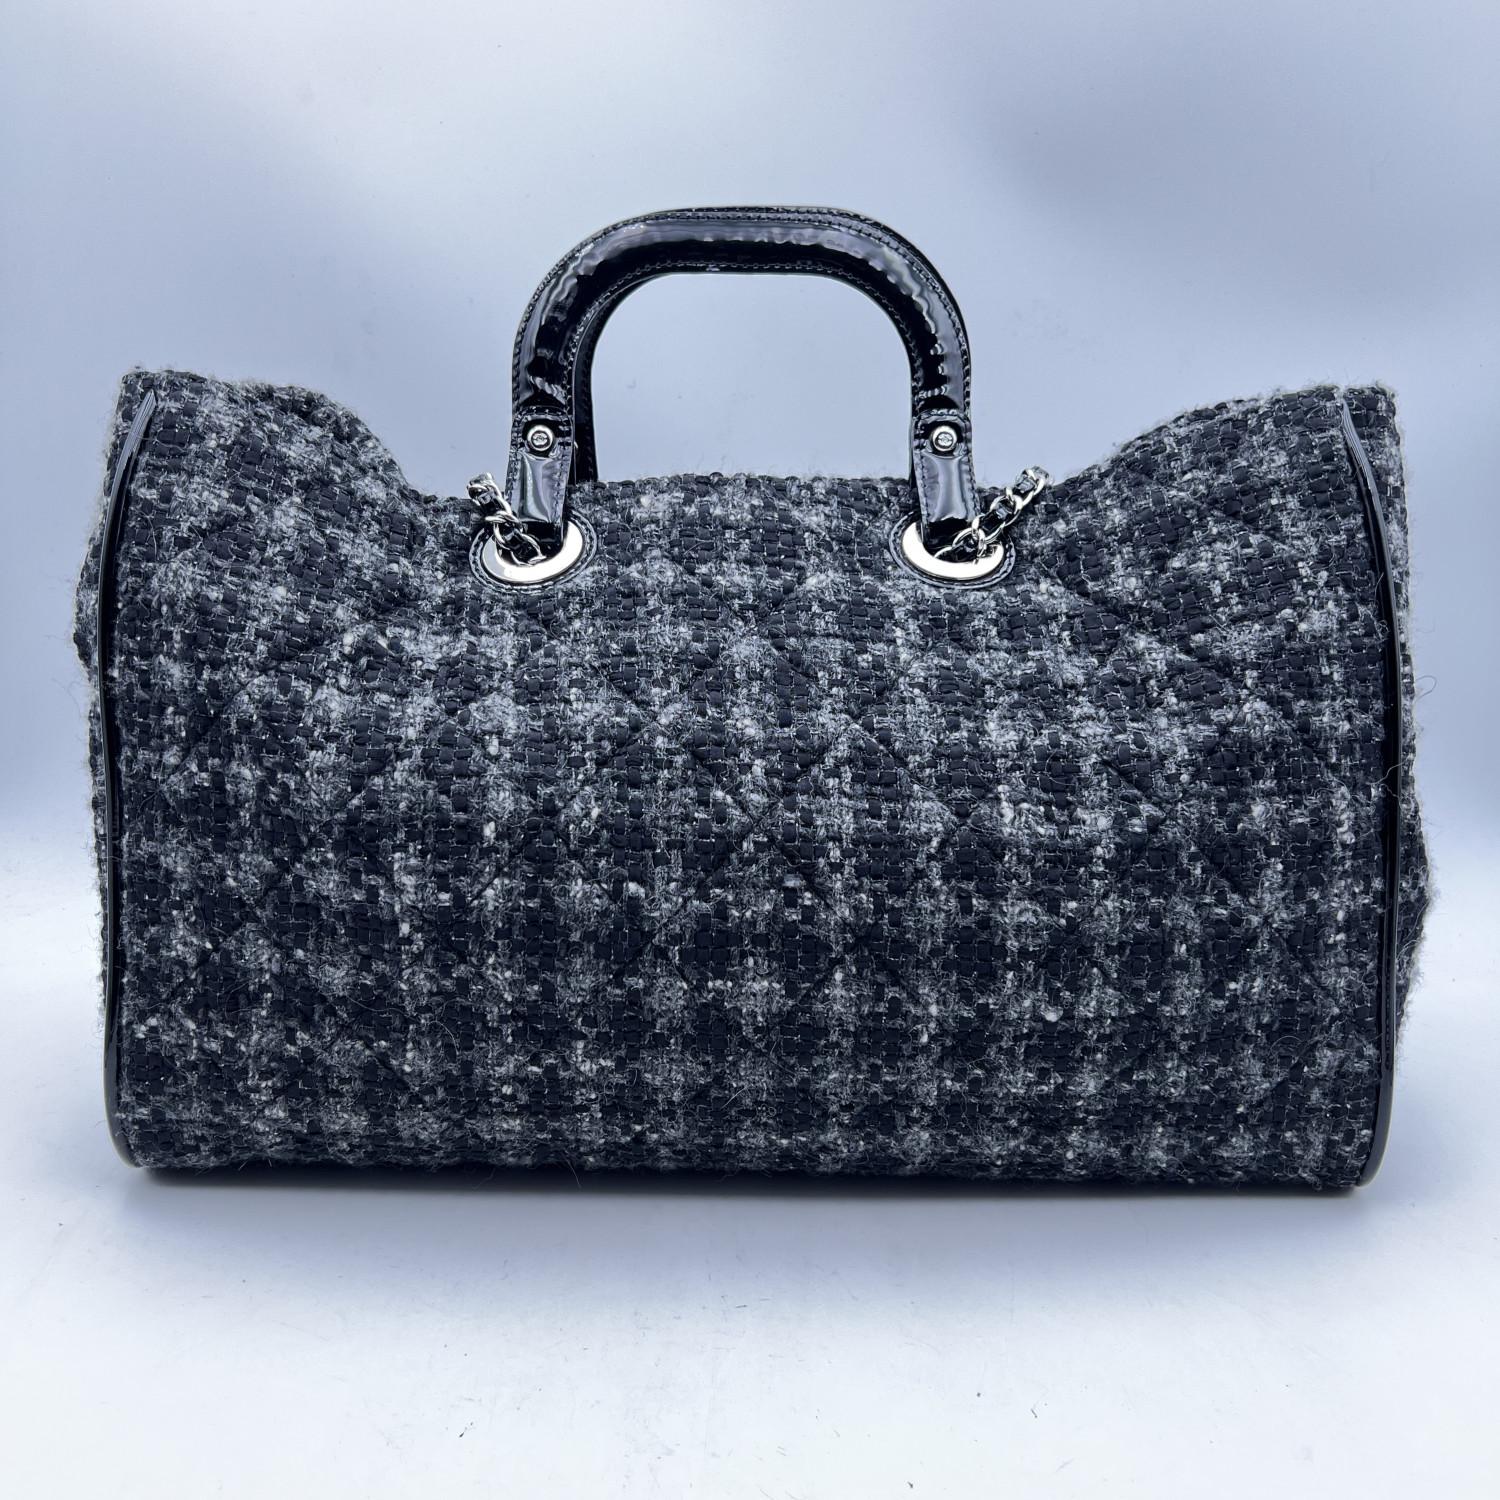 tweed and leather handbag